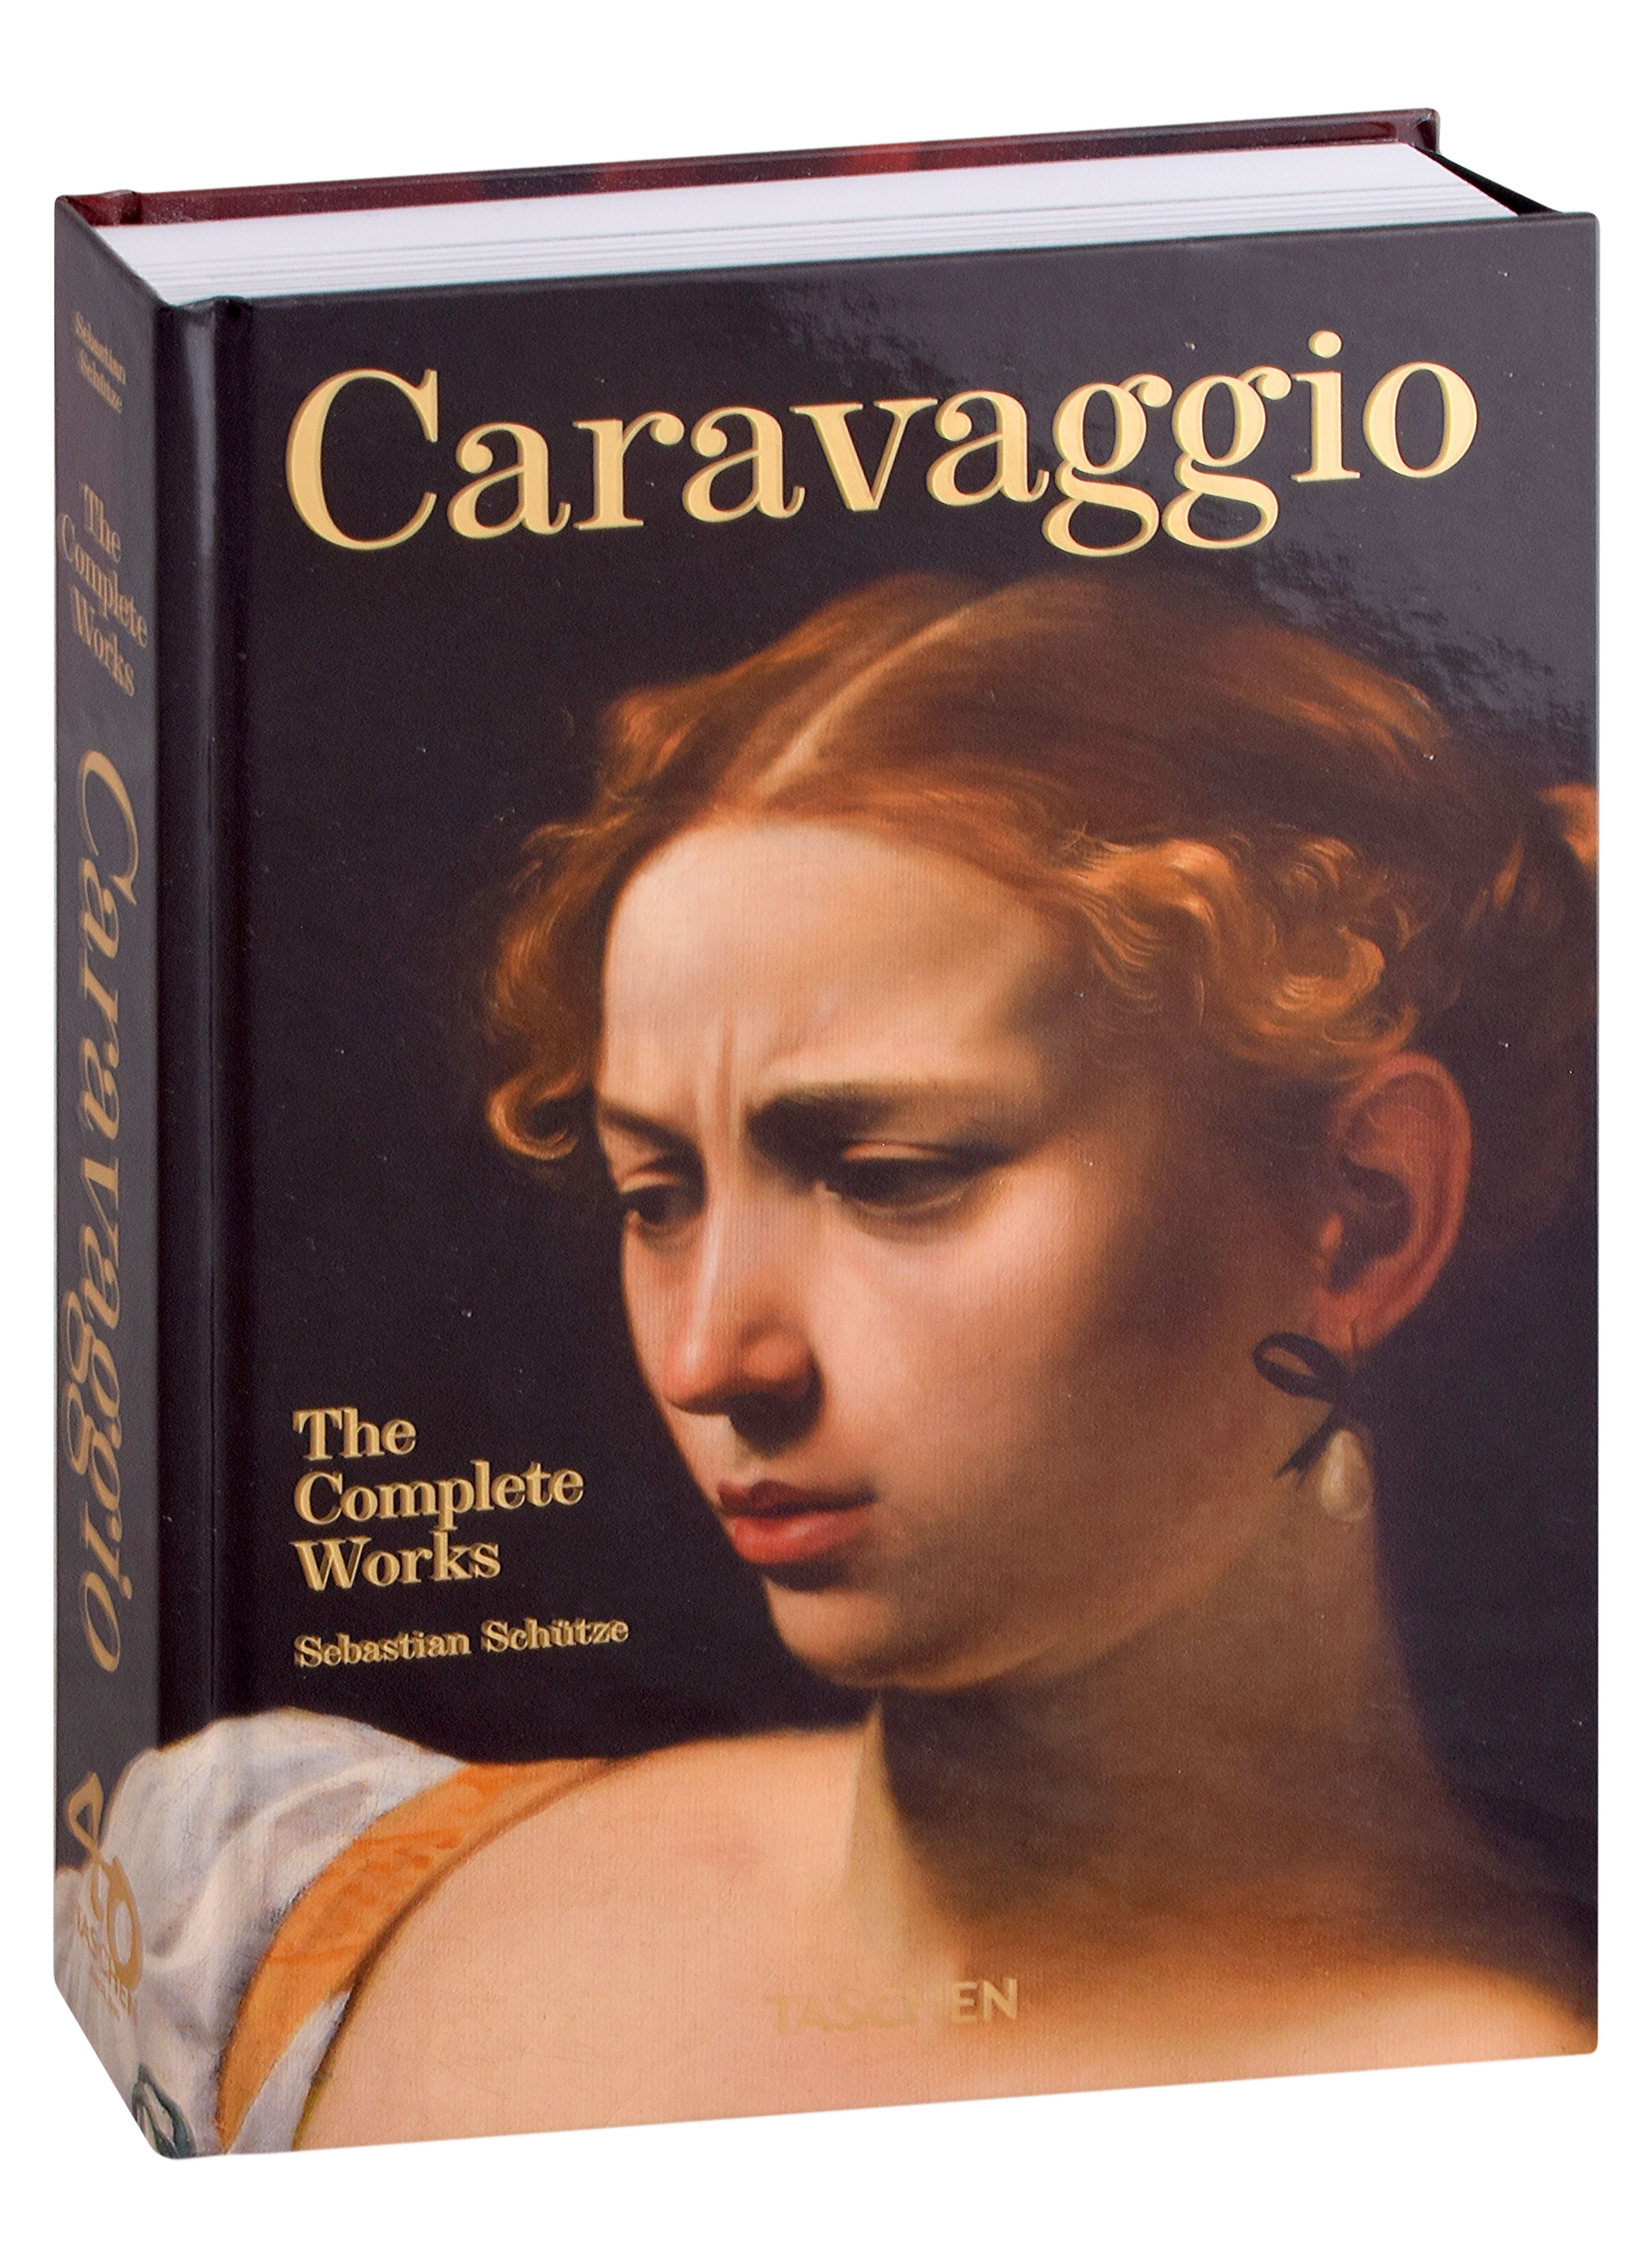 Шютце Себастьян - Caravaggio. The complete works. 40th Anniversary edition